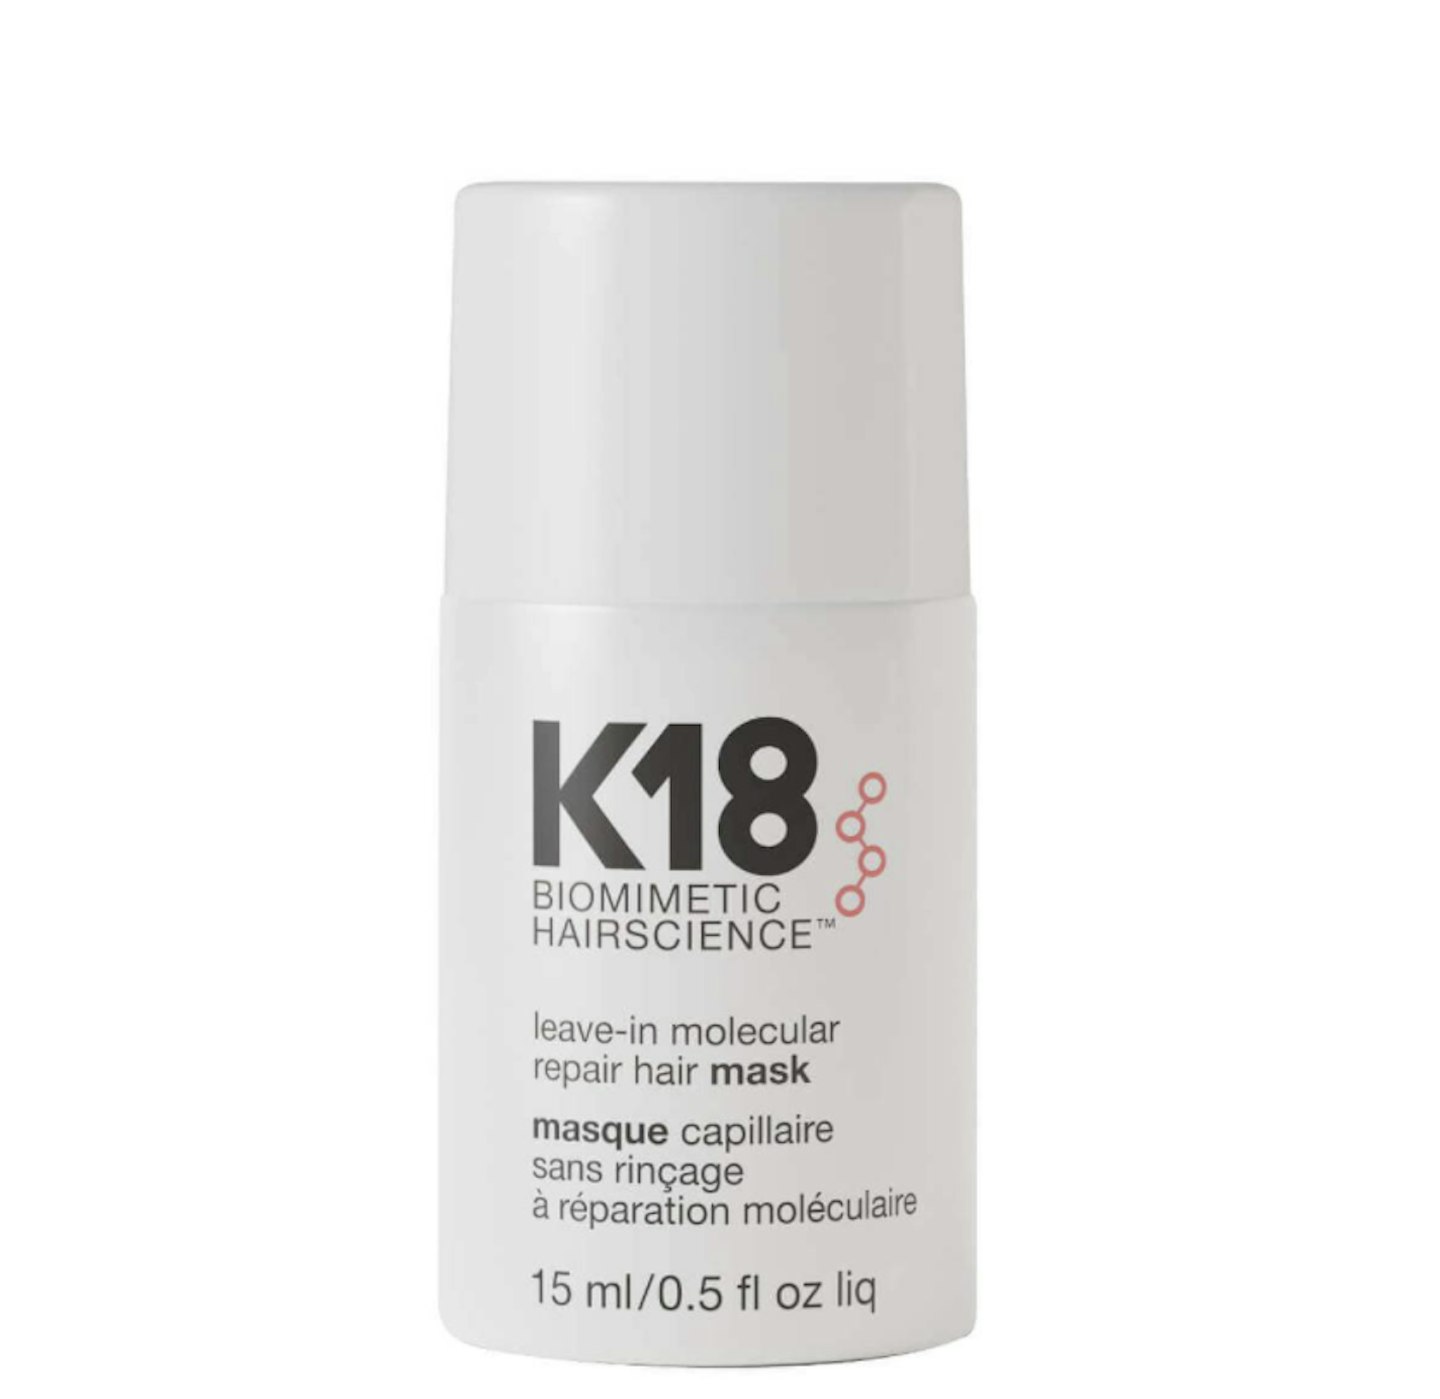 K18 Leave-In Molecular Repair Hair Mask (15ml)